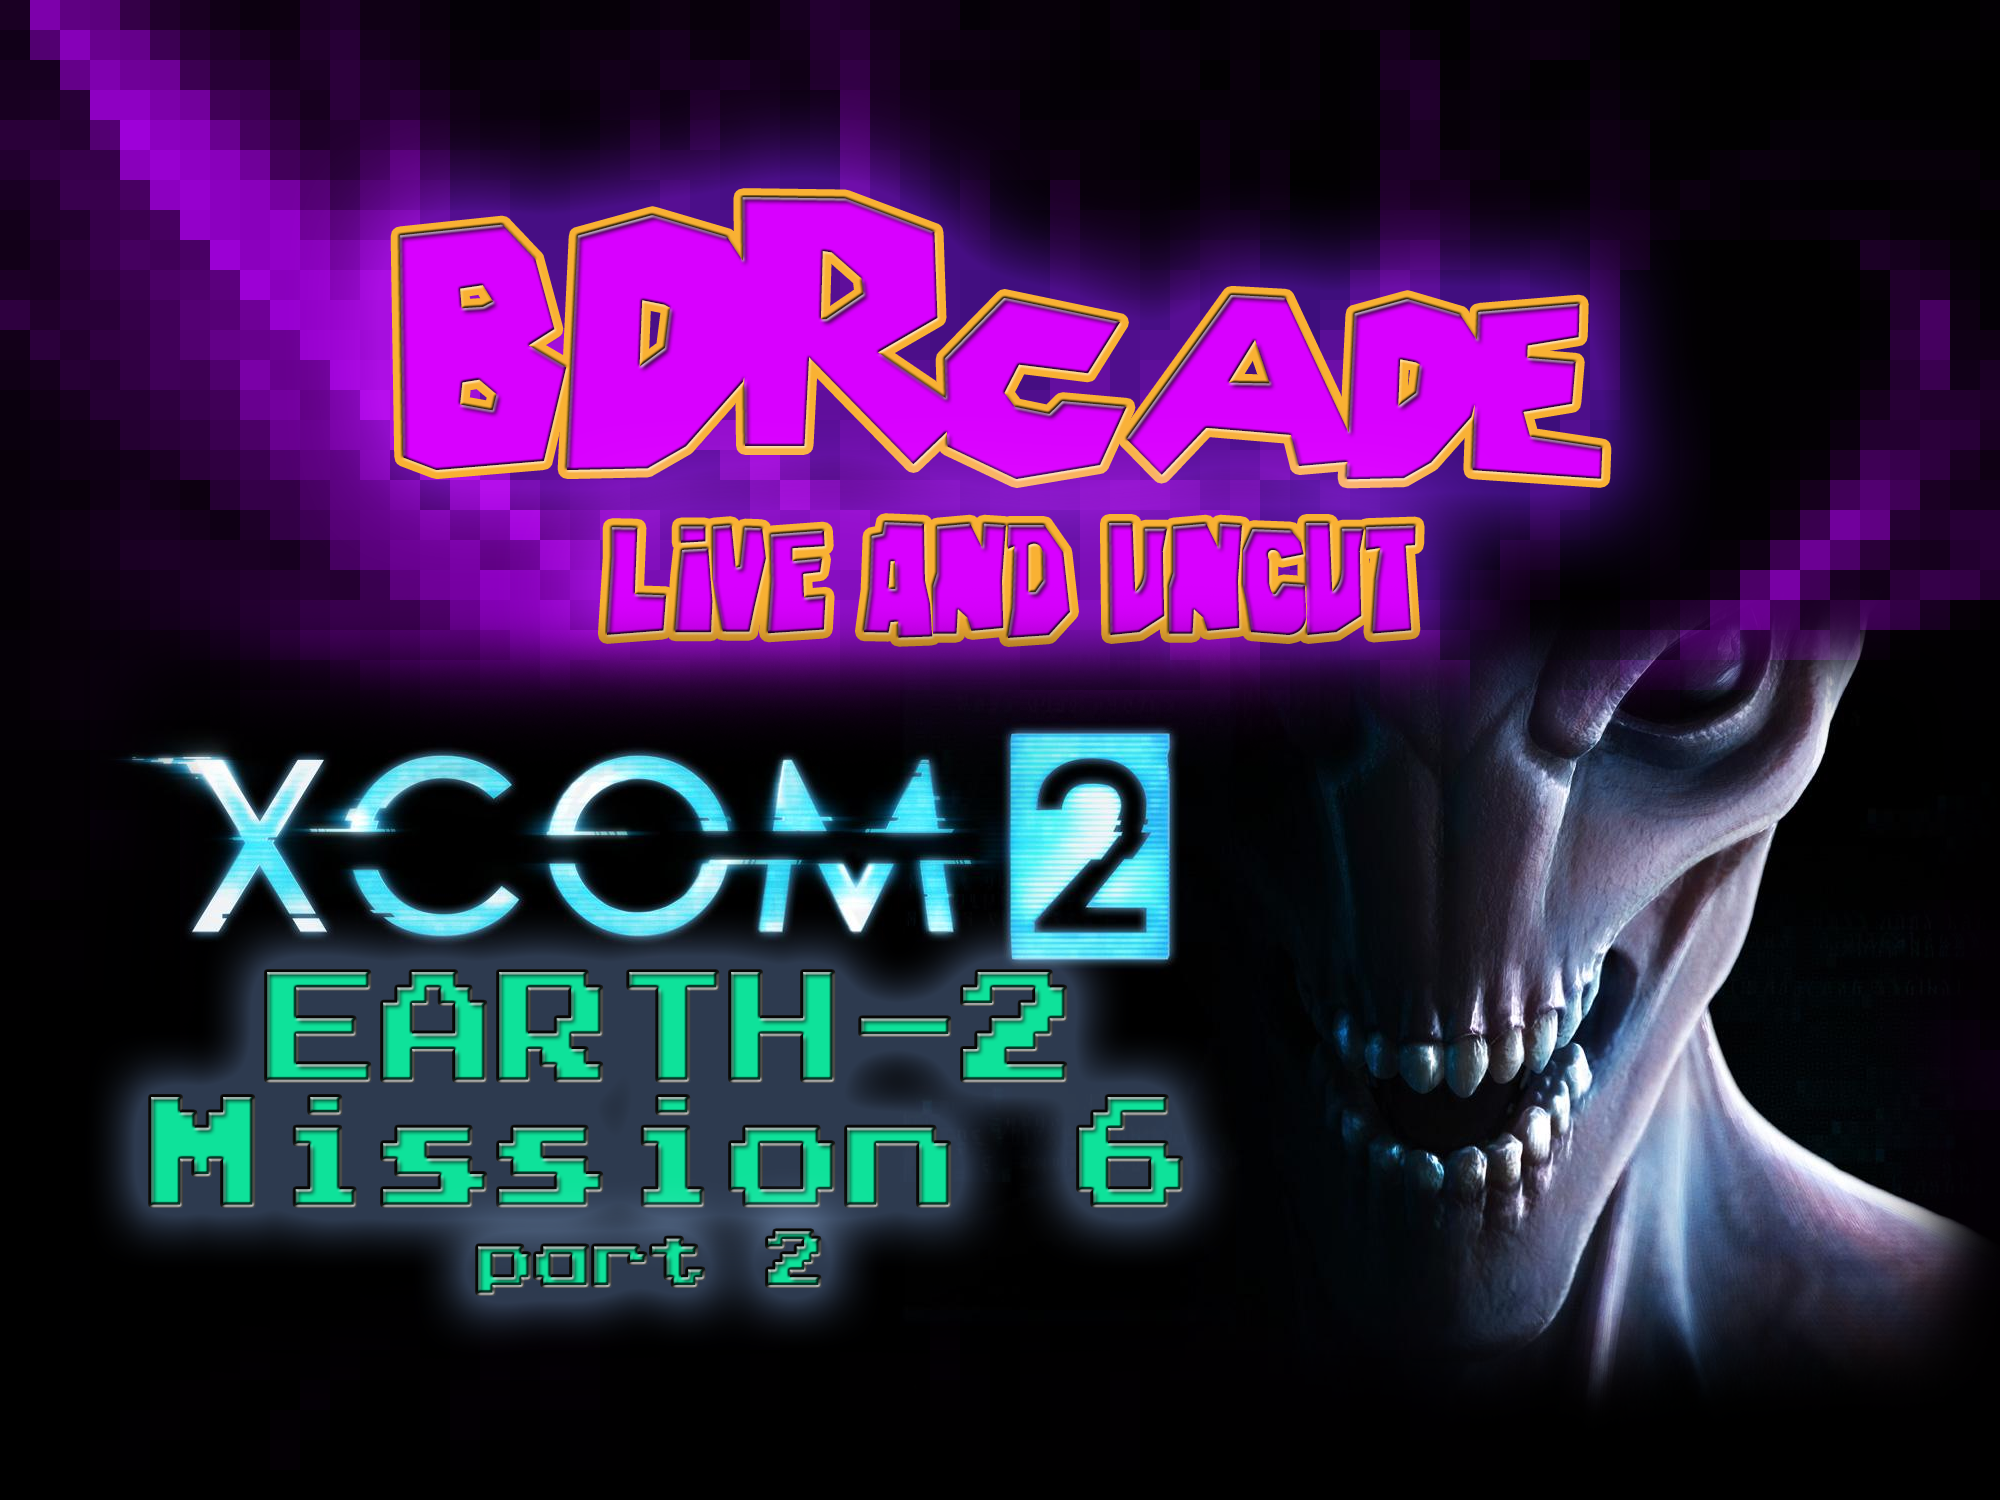 XCOM 2 (Earth-2) : Mission 6 Part 2 – A BDRcade Live Stream